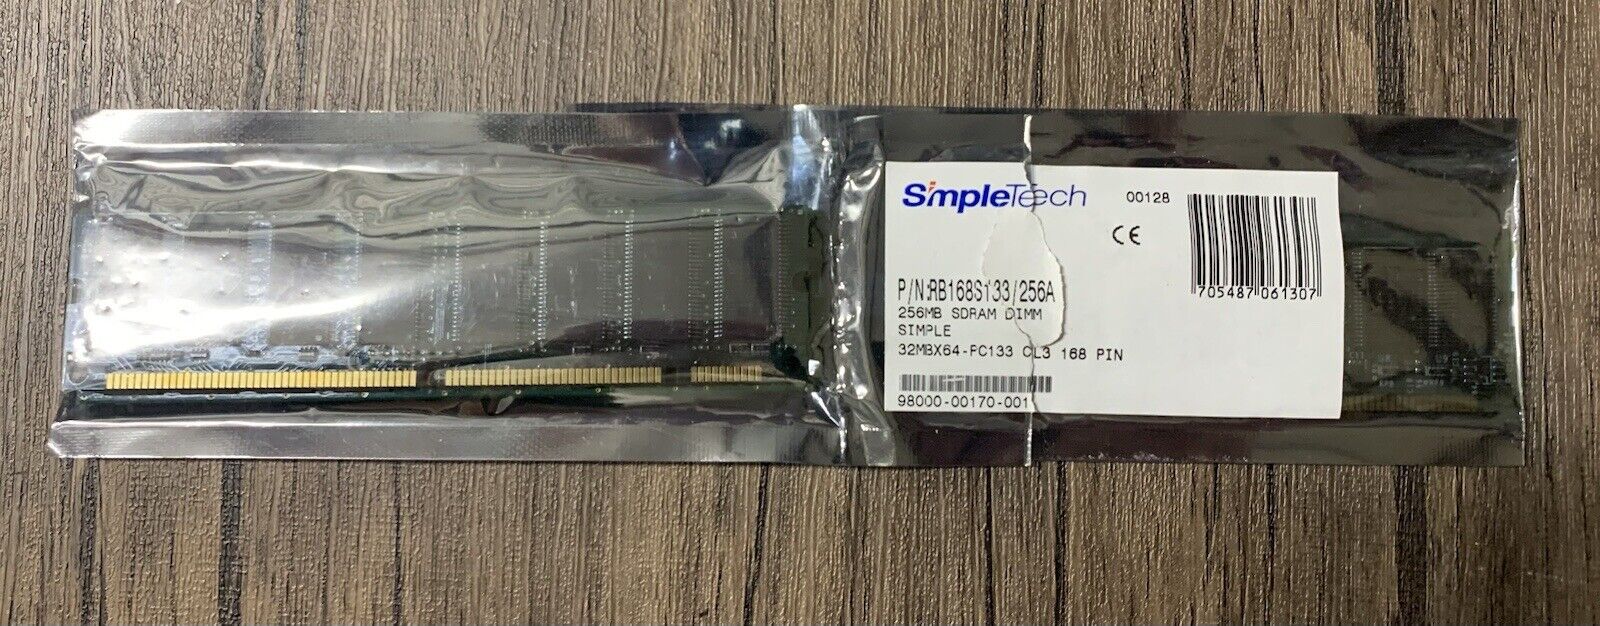 2 x NEW SIMPLETECH 256MB-PC133 168 PIN SDRAM DIMM